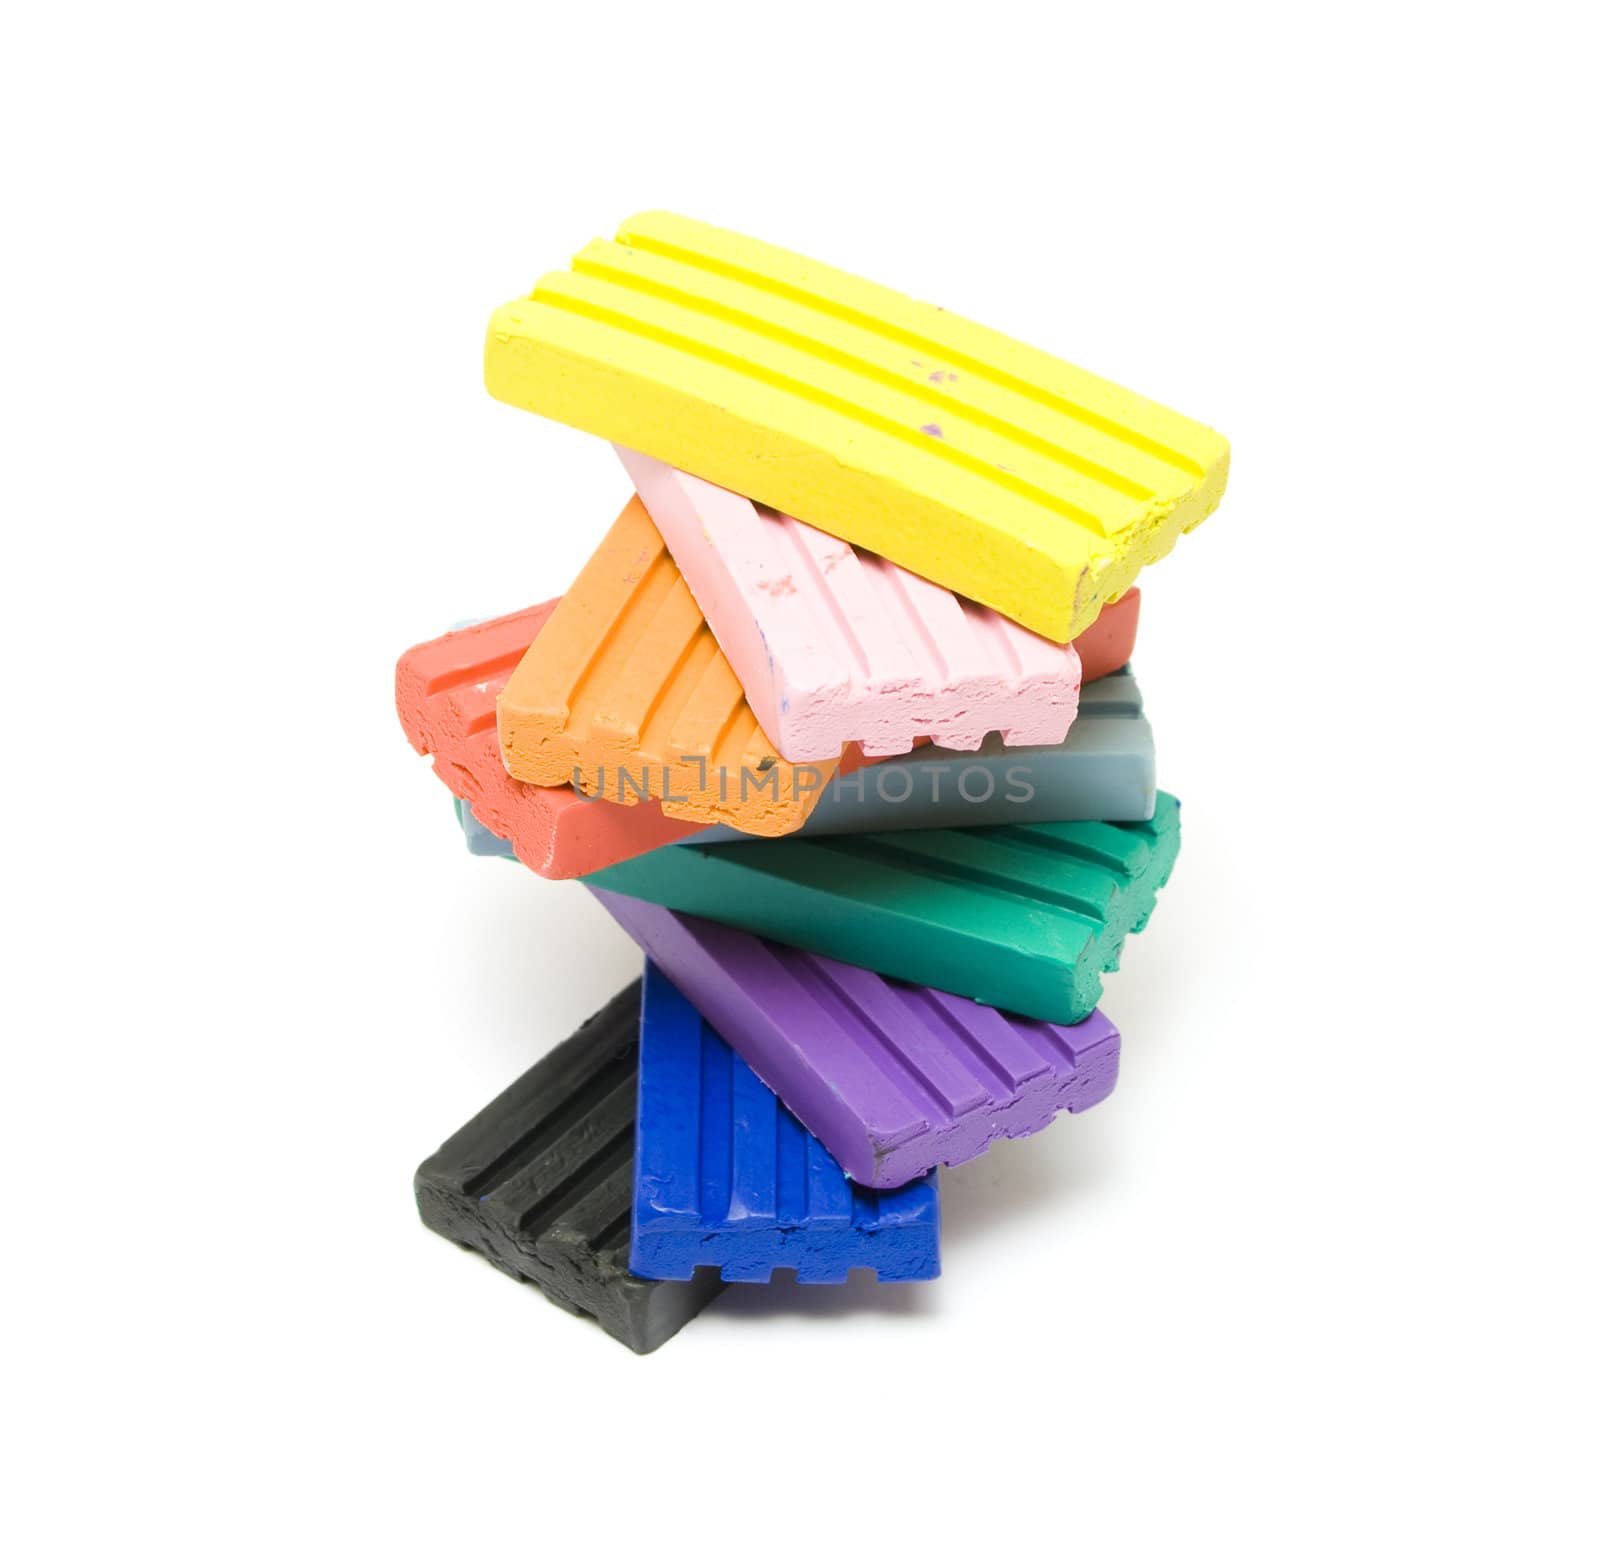 Plasticine bricks by ursolv